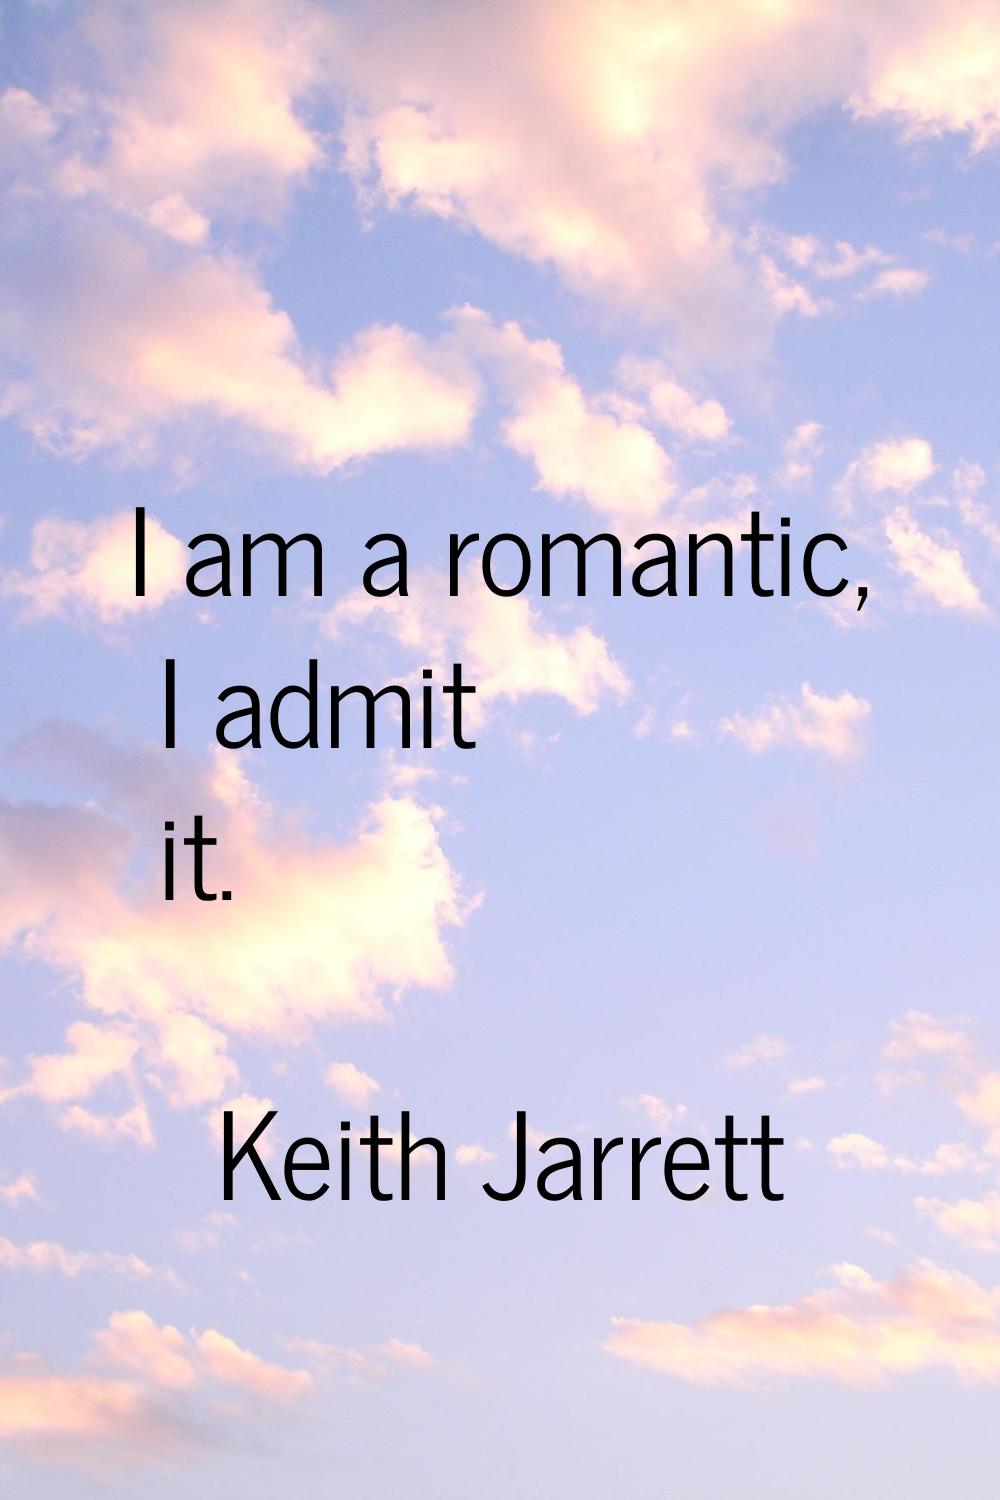 I am a romantic, I admit it.